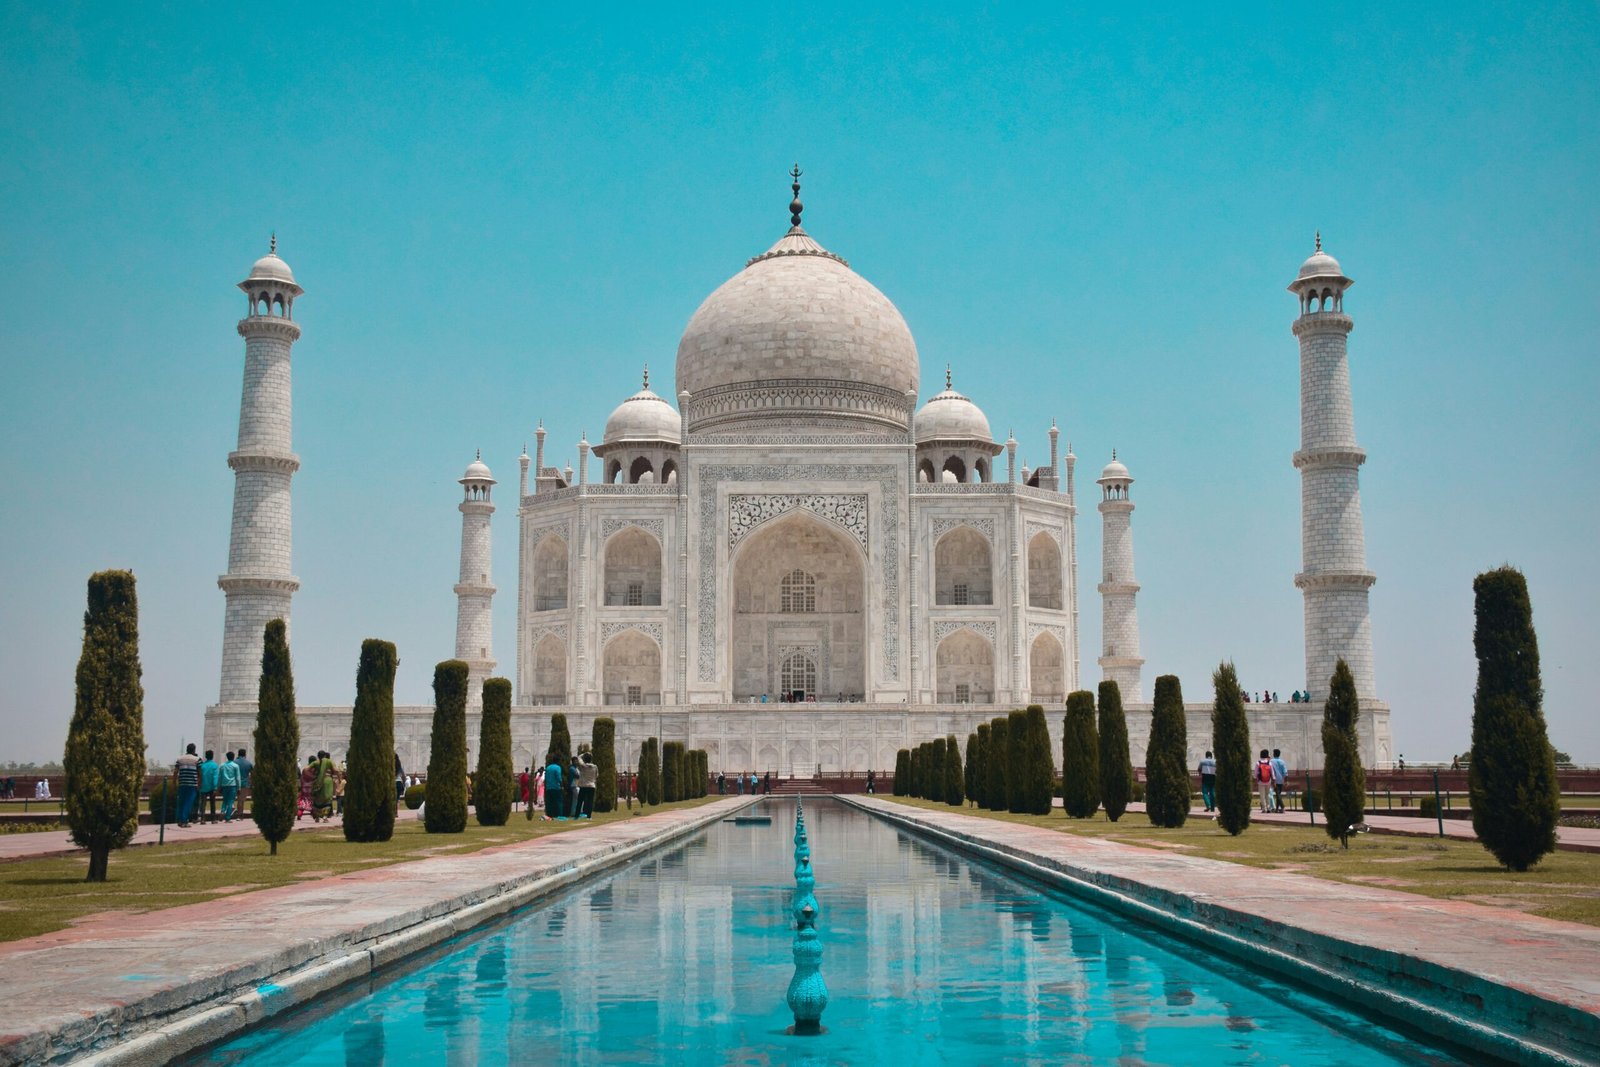 The Fascinating History of the Taj Mahal